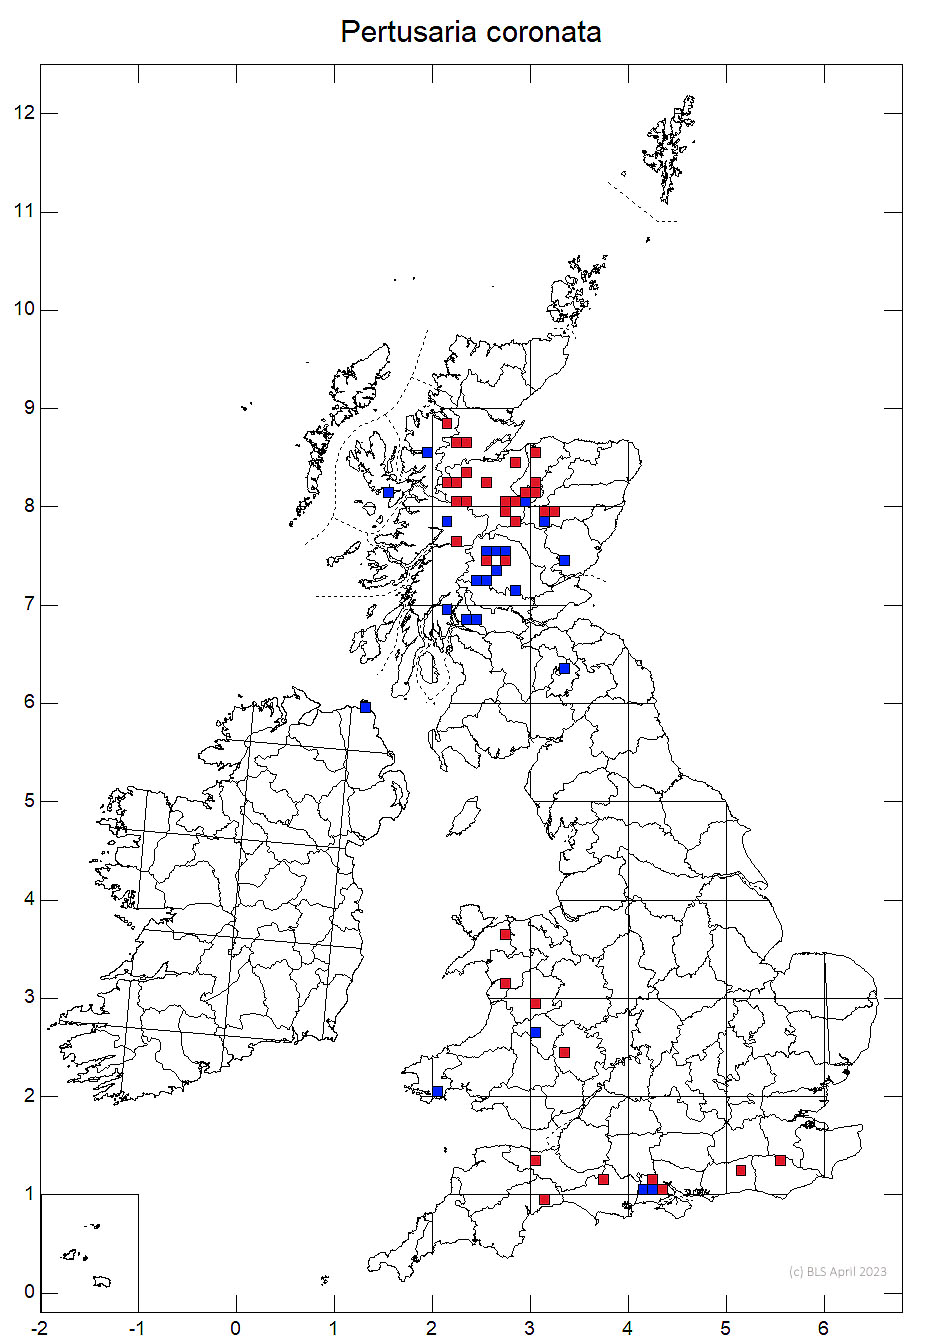 Pertusaria coronata 10km sq distribution map